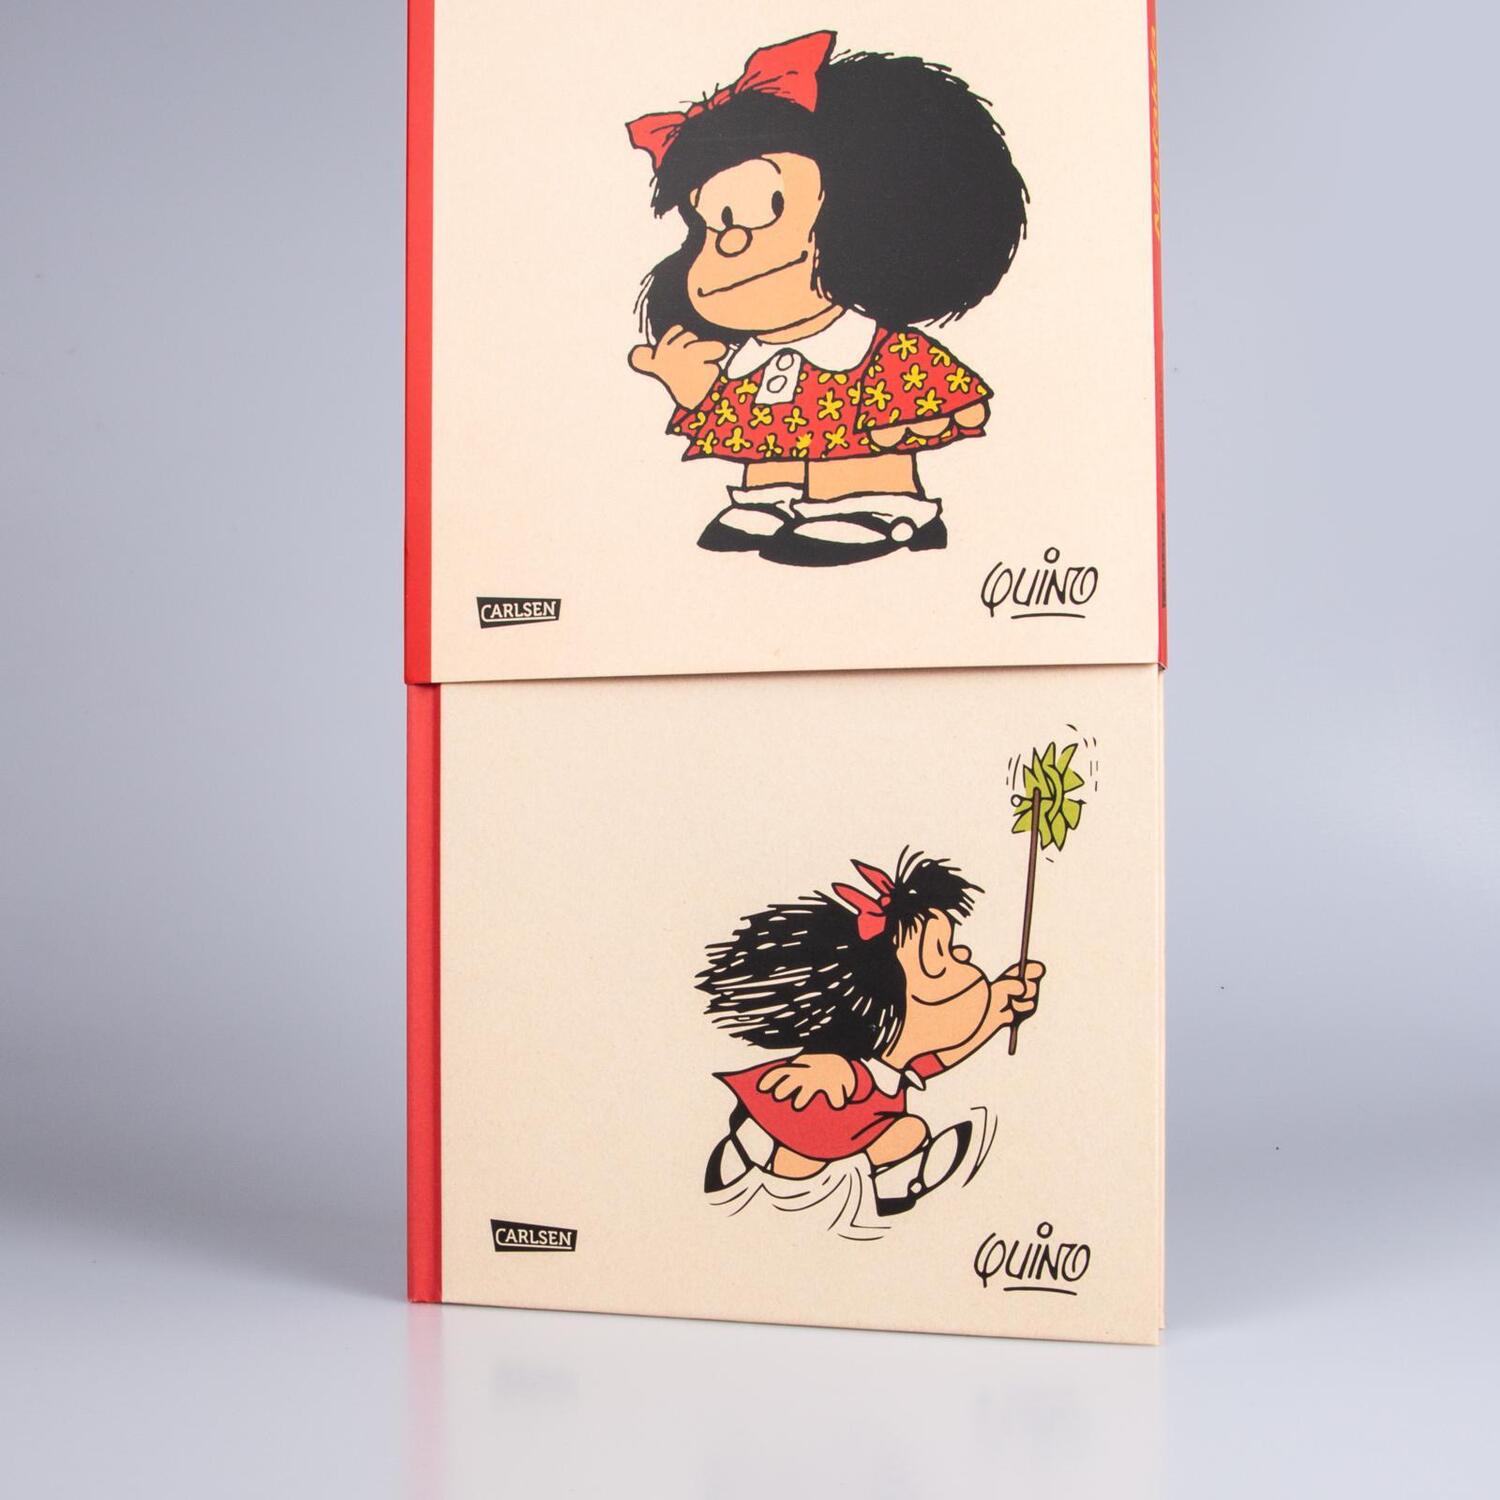 Bild: 9783551029164 | Die Bibliothek der Comic-Klassiker: Mafalda | Quino | Buch | 208 S.